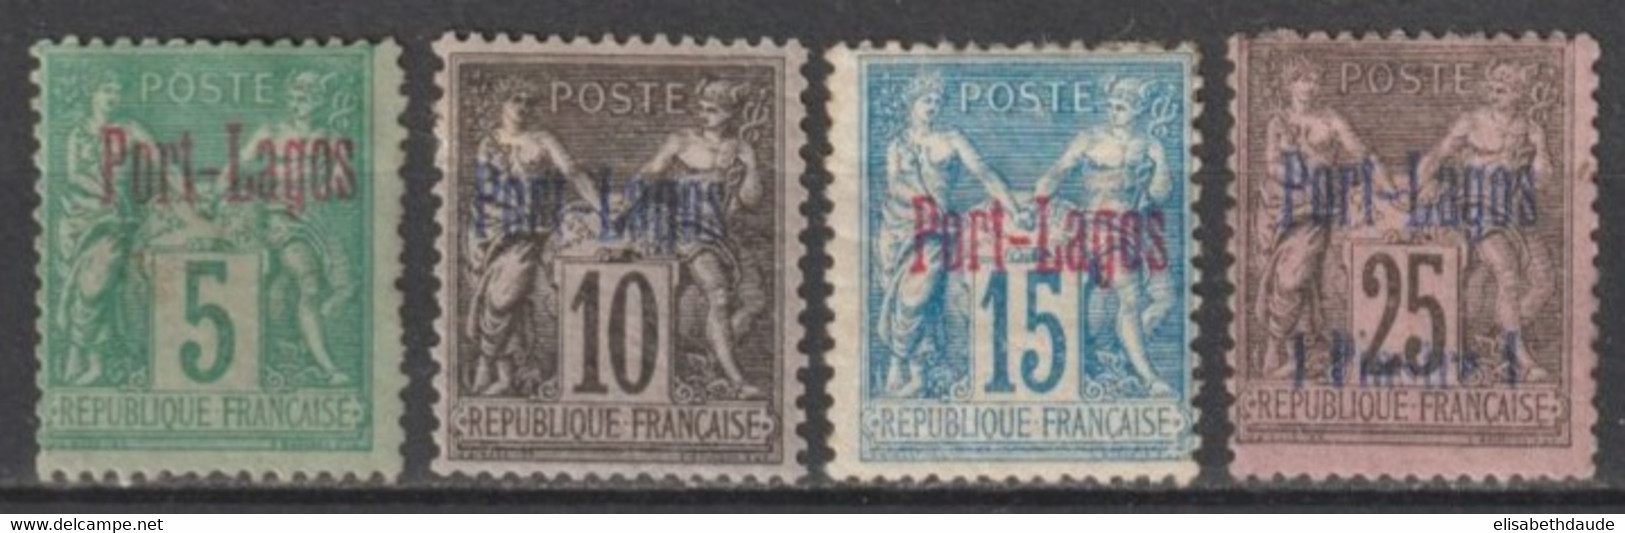 PORT LAGOS - 1893 - YVERT N° 1/4 * MH CHARNIERE ASSEZ FORTE - COTE = 335 EUR. - Nuevos